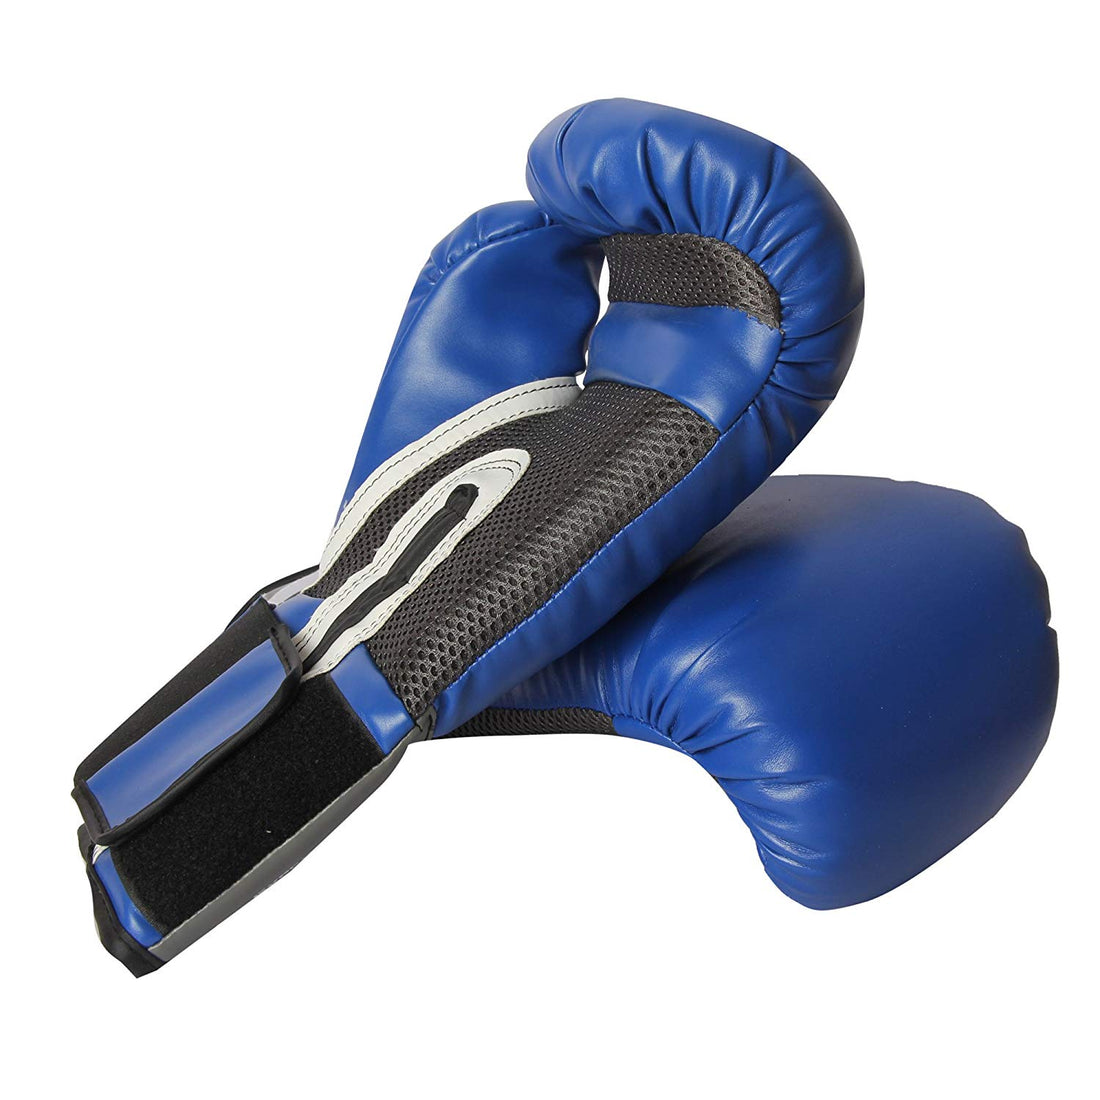 Everlast Pro Style Training Boxing Gloves - Best Price online Prokicksports.com